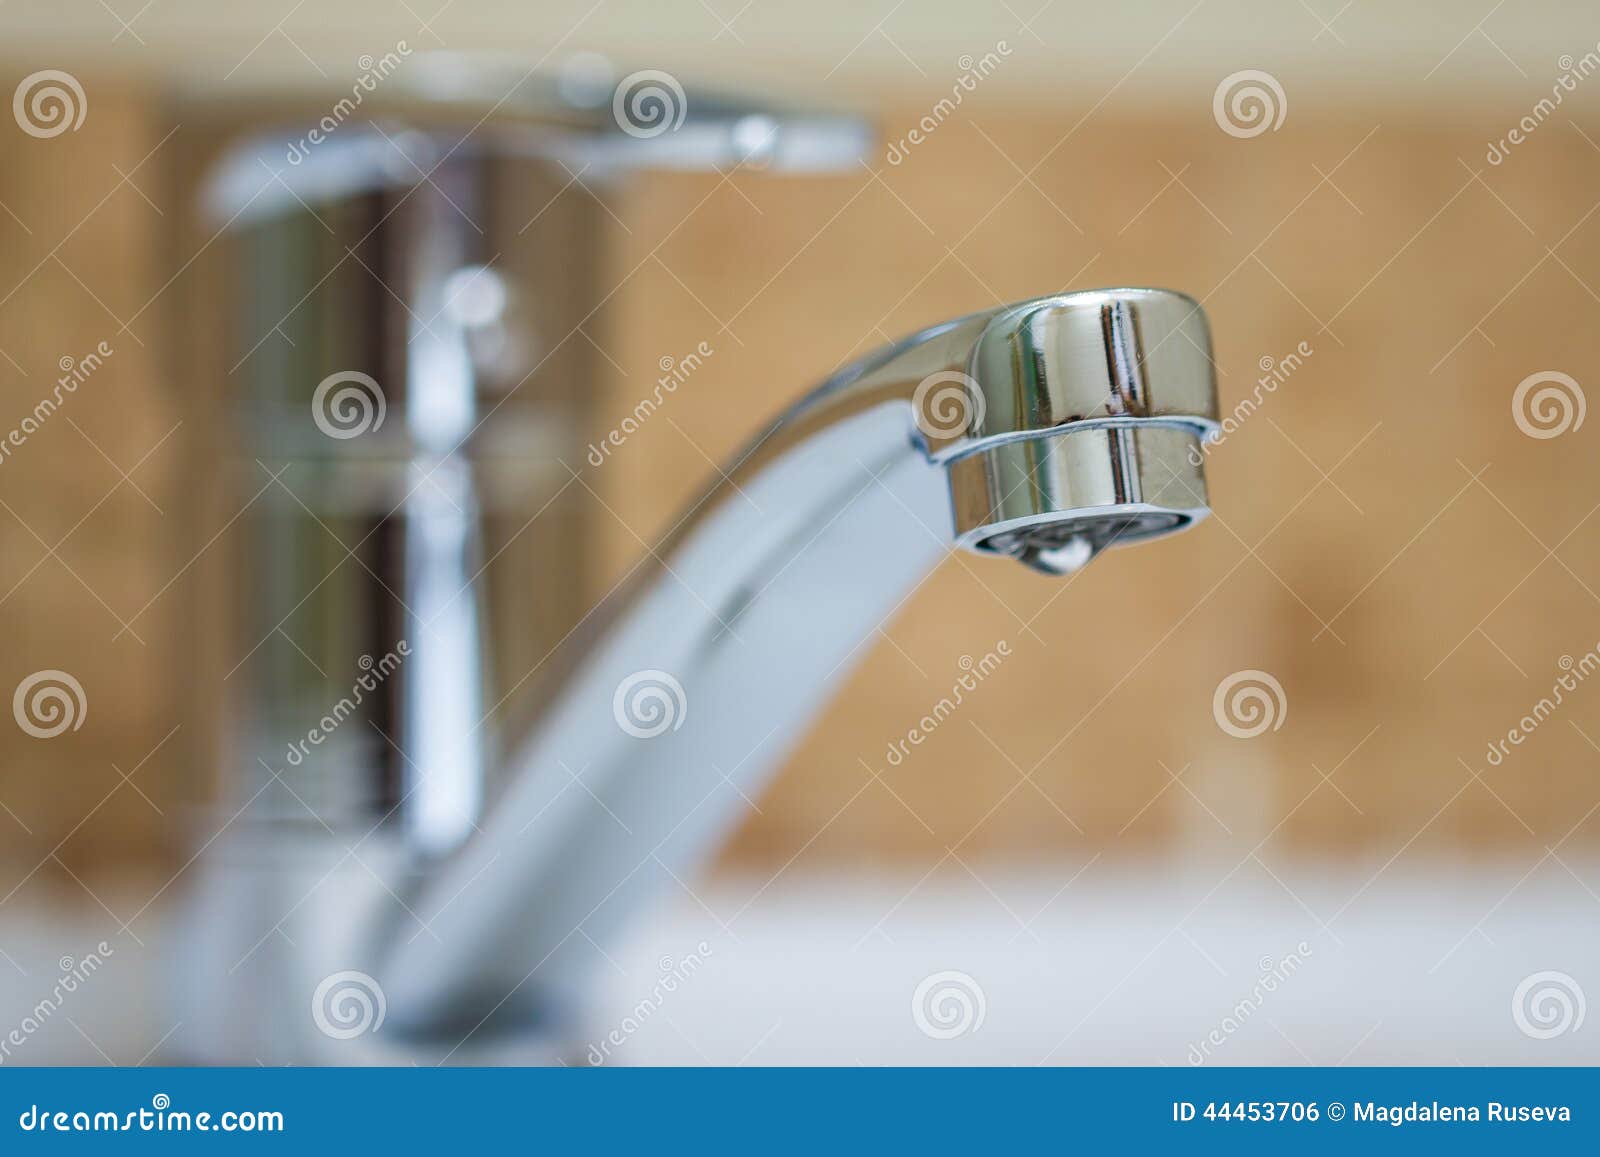 chrome sink or nickel for bathroom